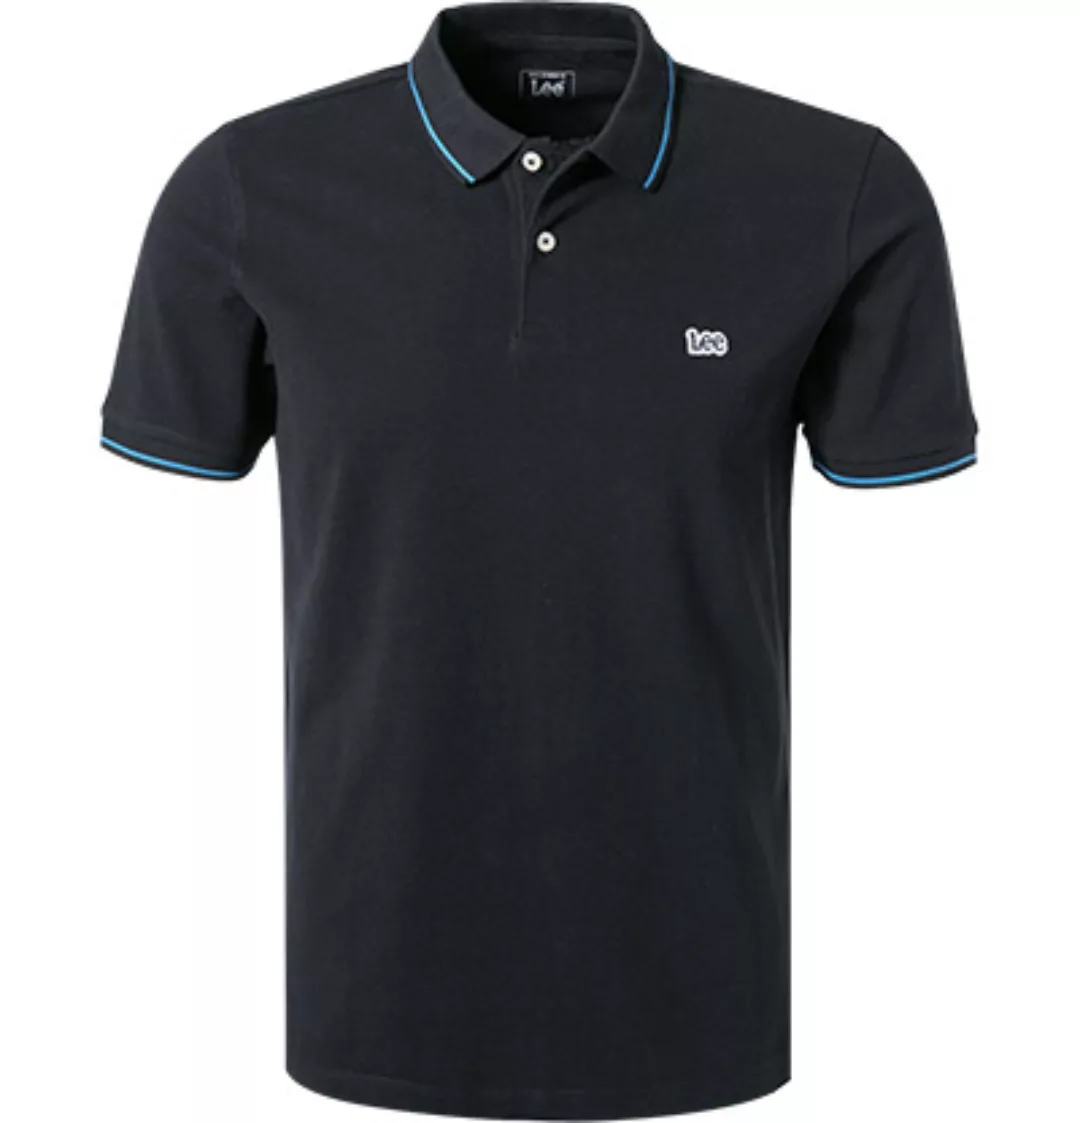 Lee Polo-Shirt black L61ARL01 günstig online kaufen